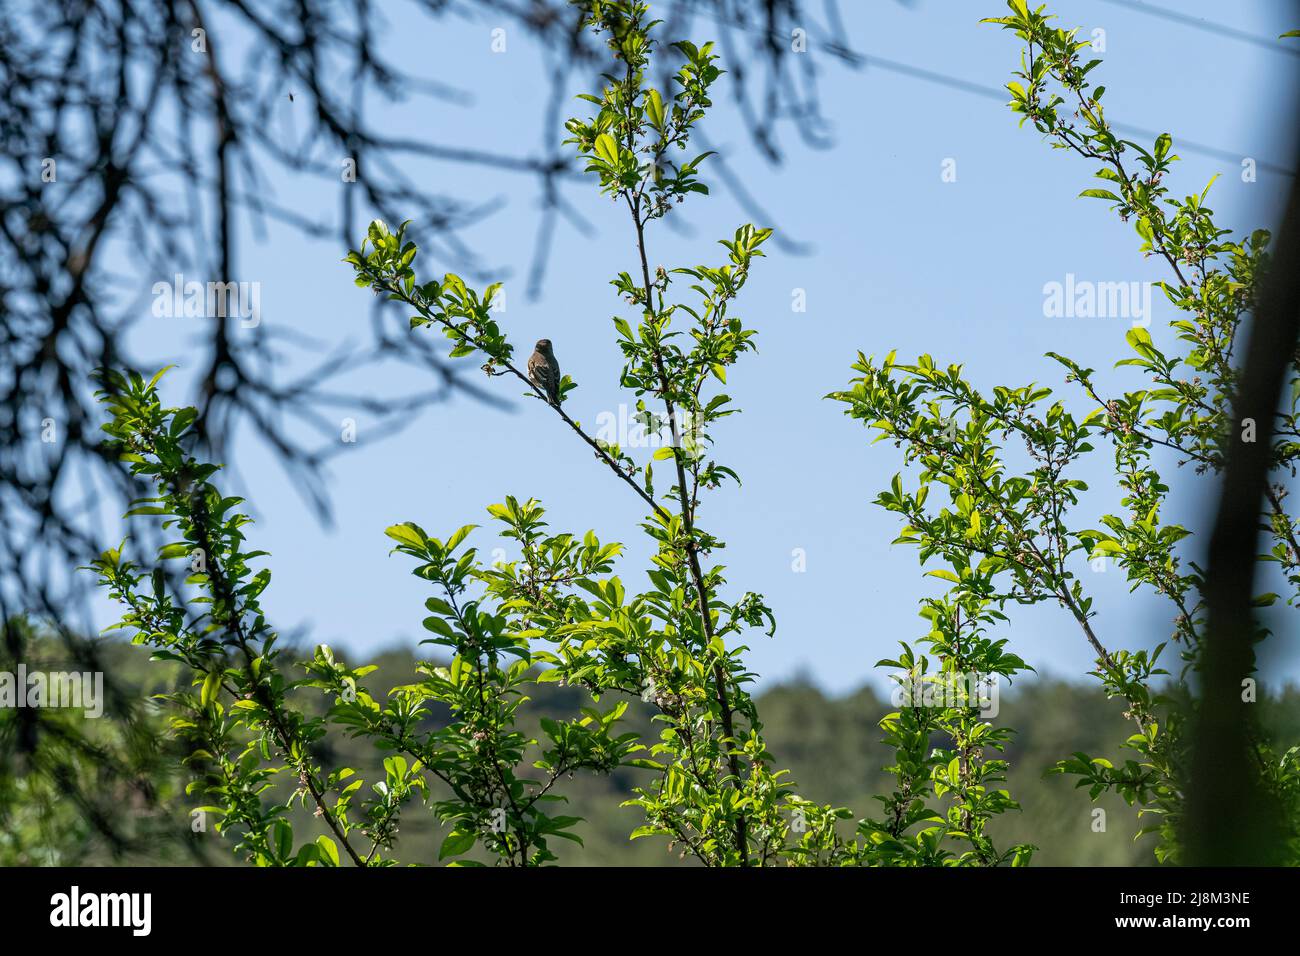 Image of bird hidden in tree branches. Stock Photo